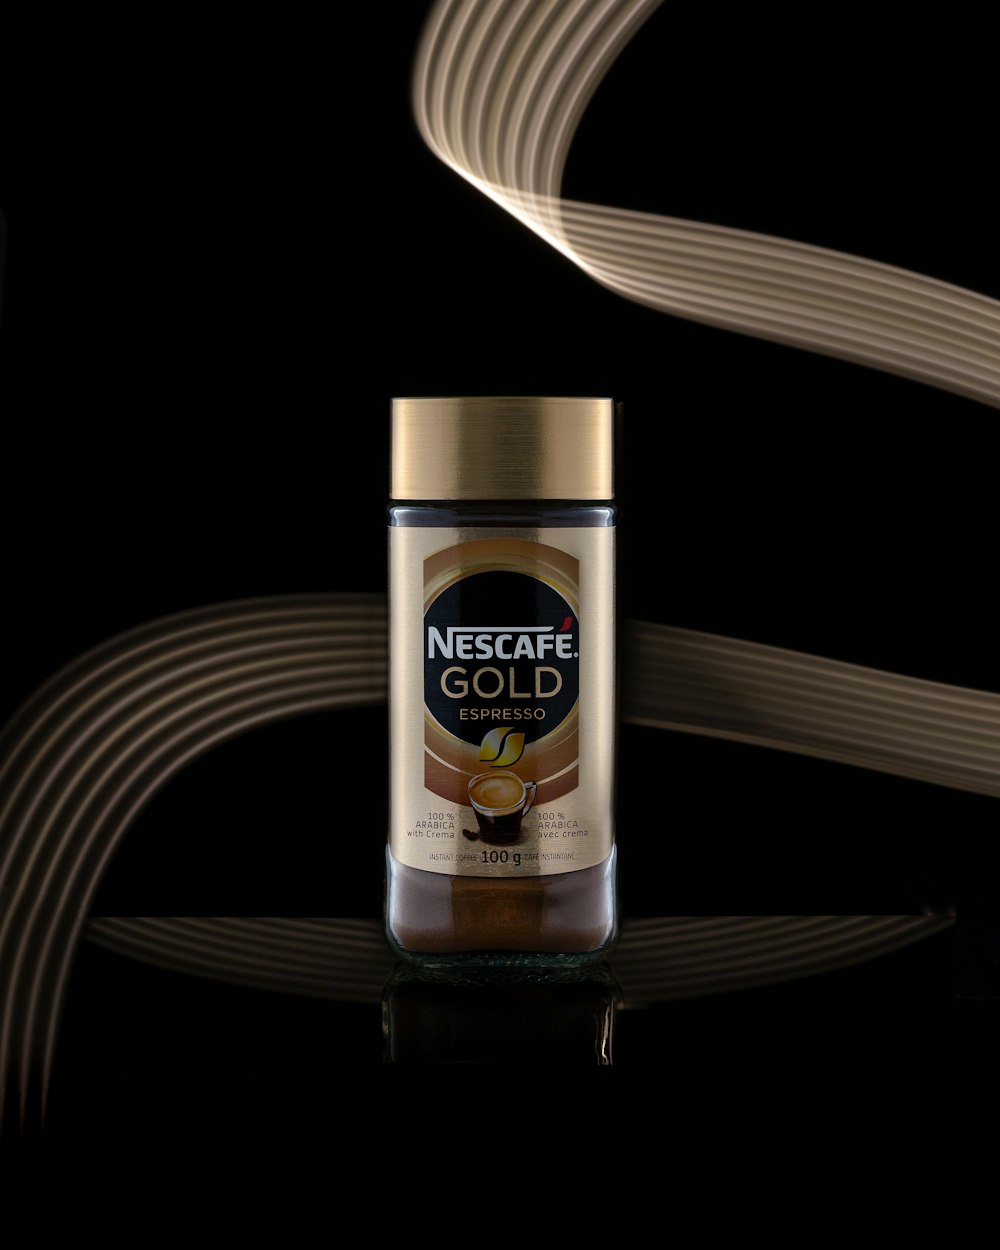 Nescafe Golf coffee jar